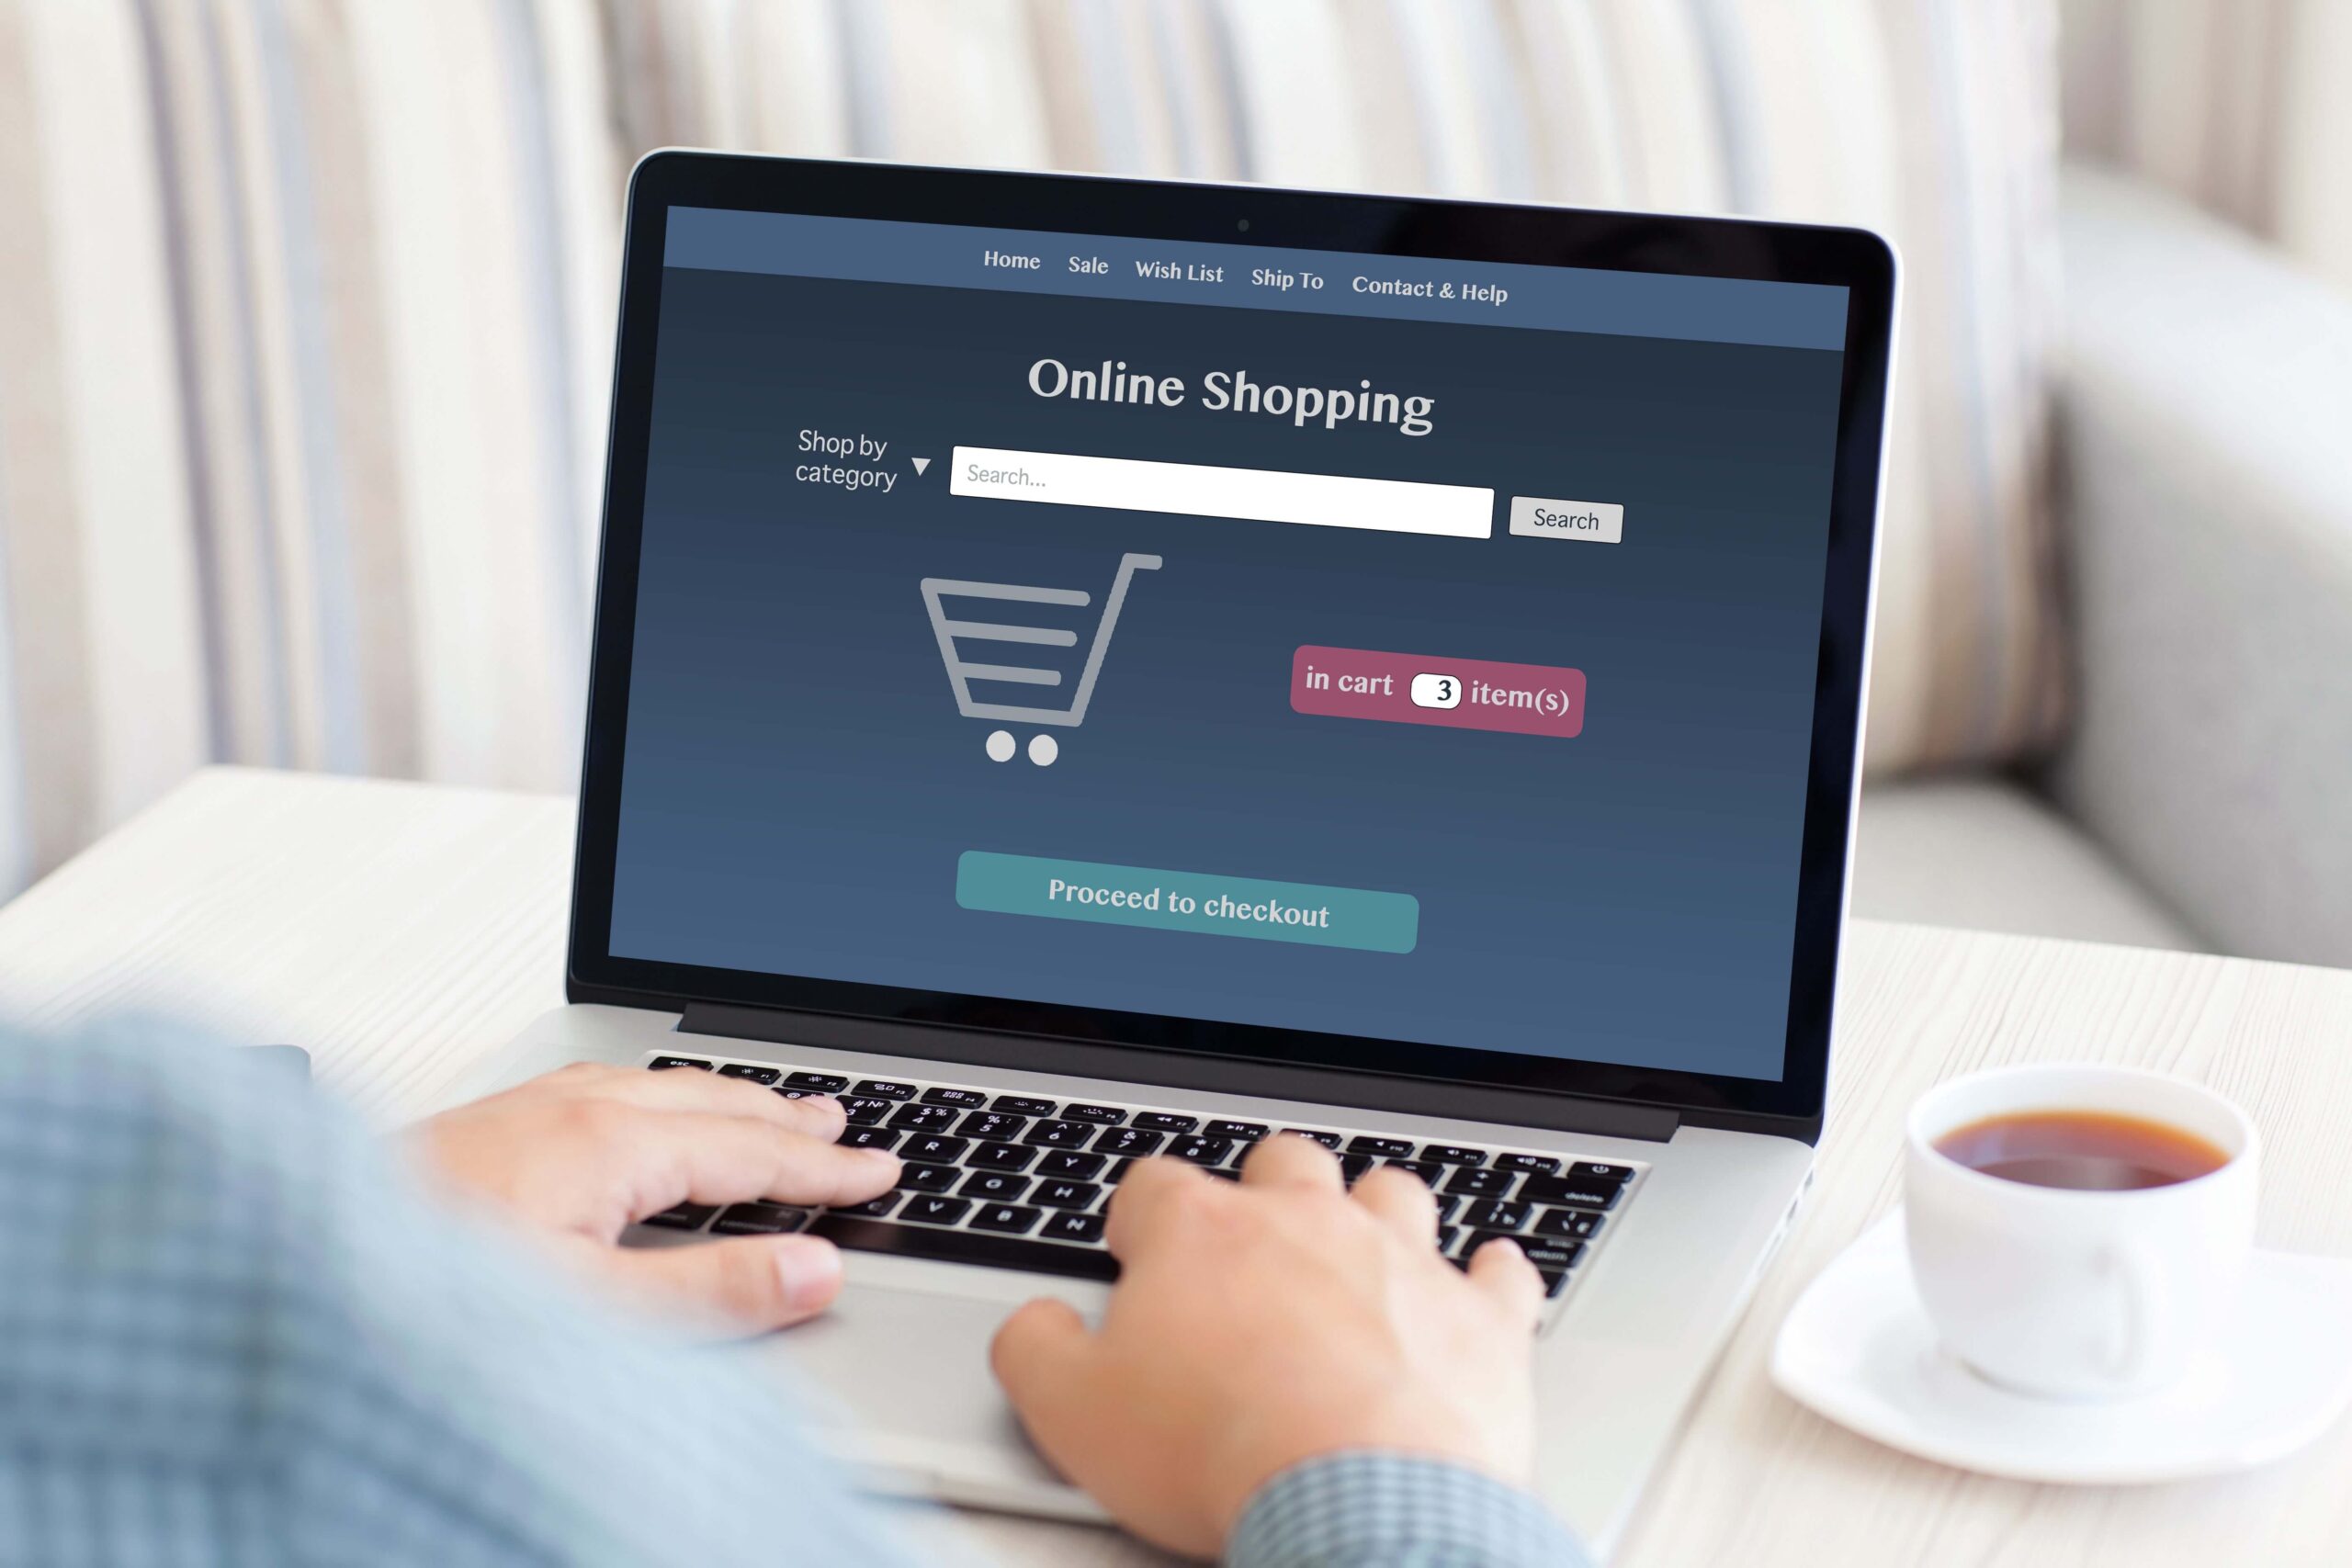 Online-shopping-search-bar